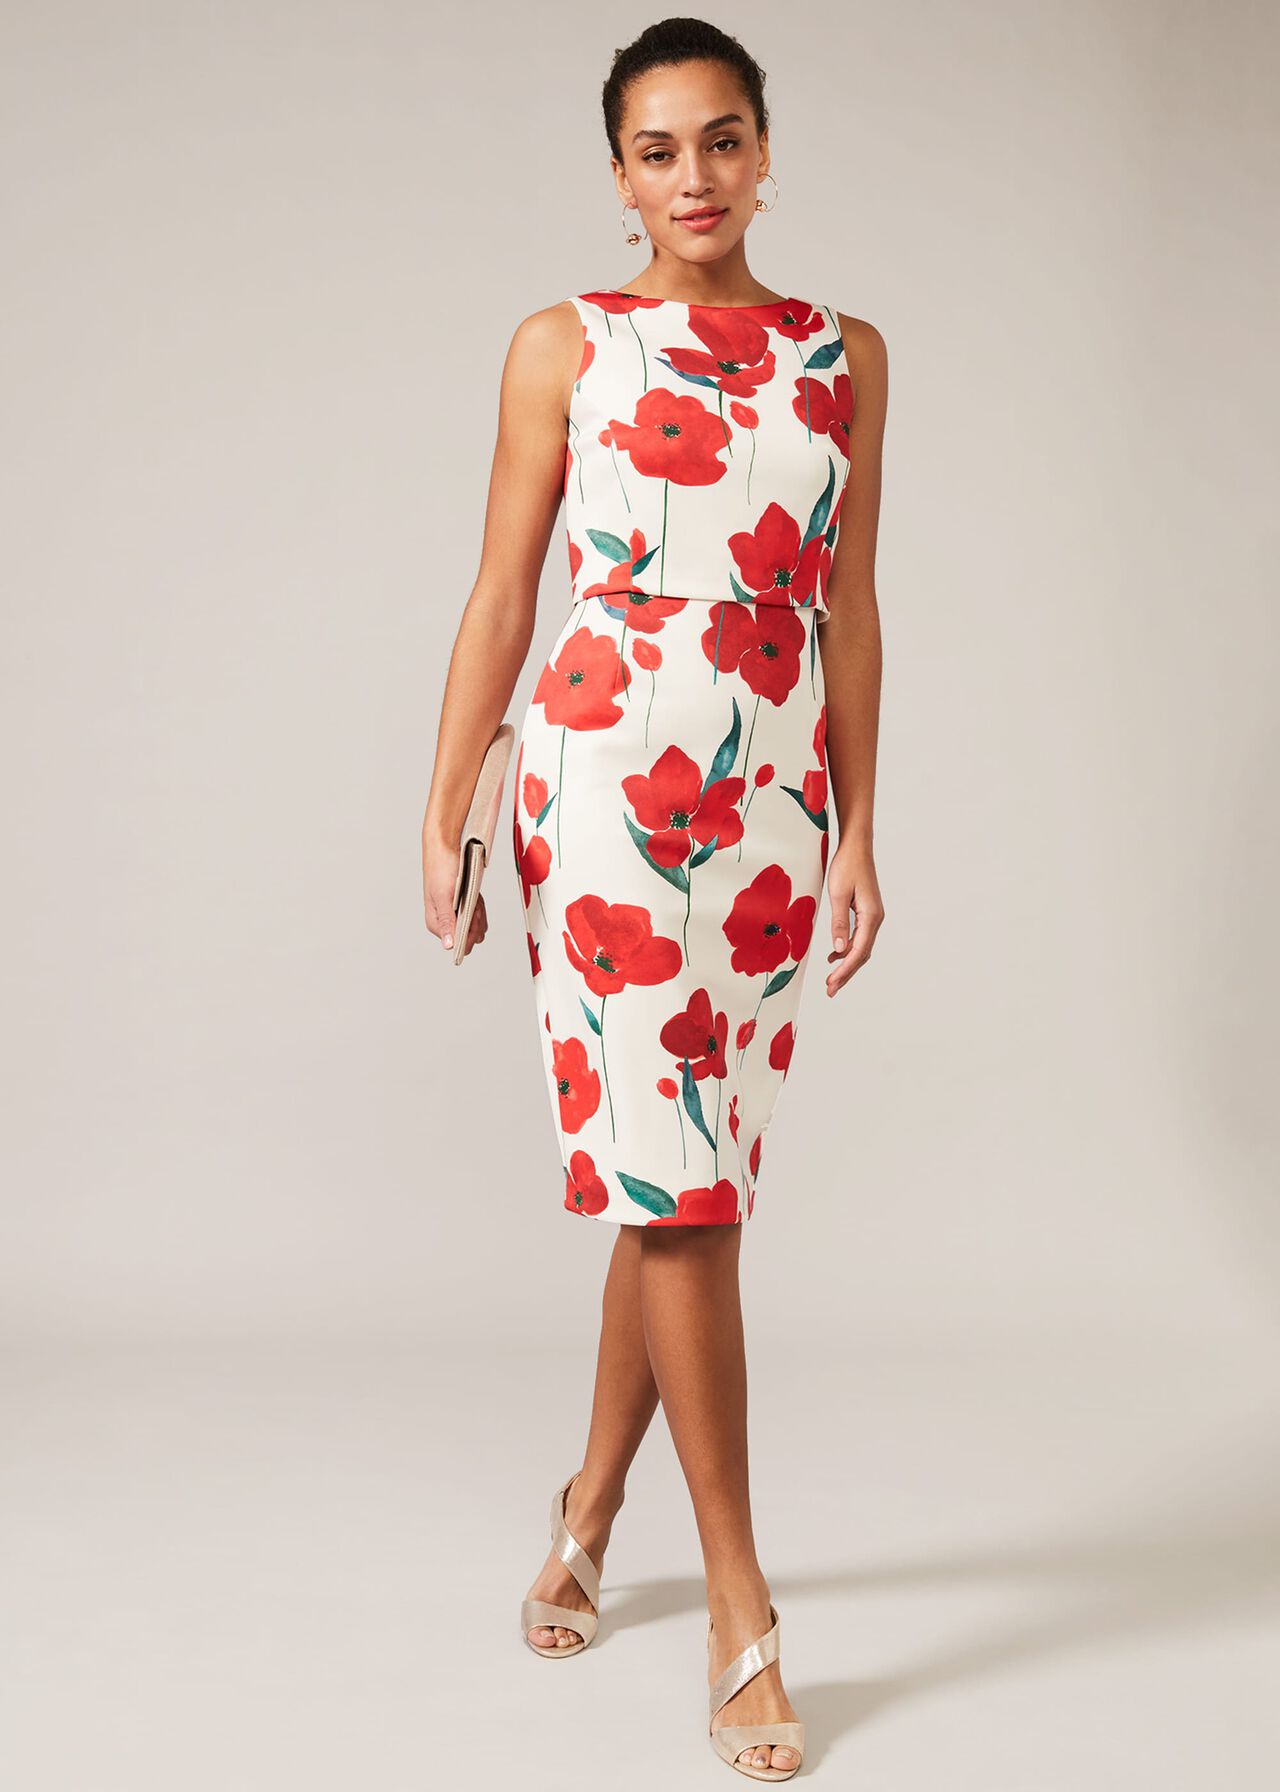 Lou-Poppy Floral Scuba Dress